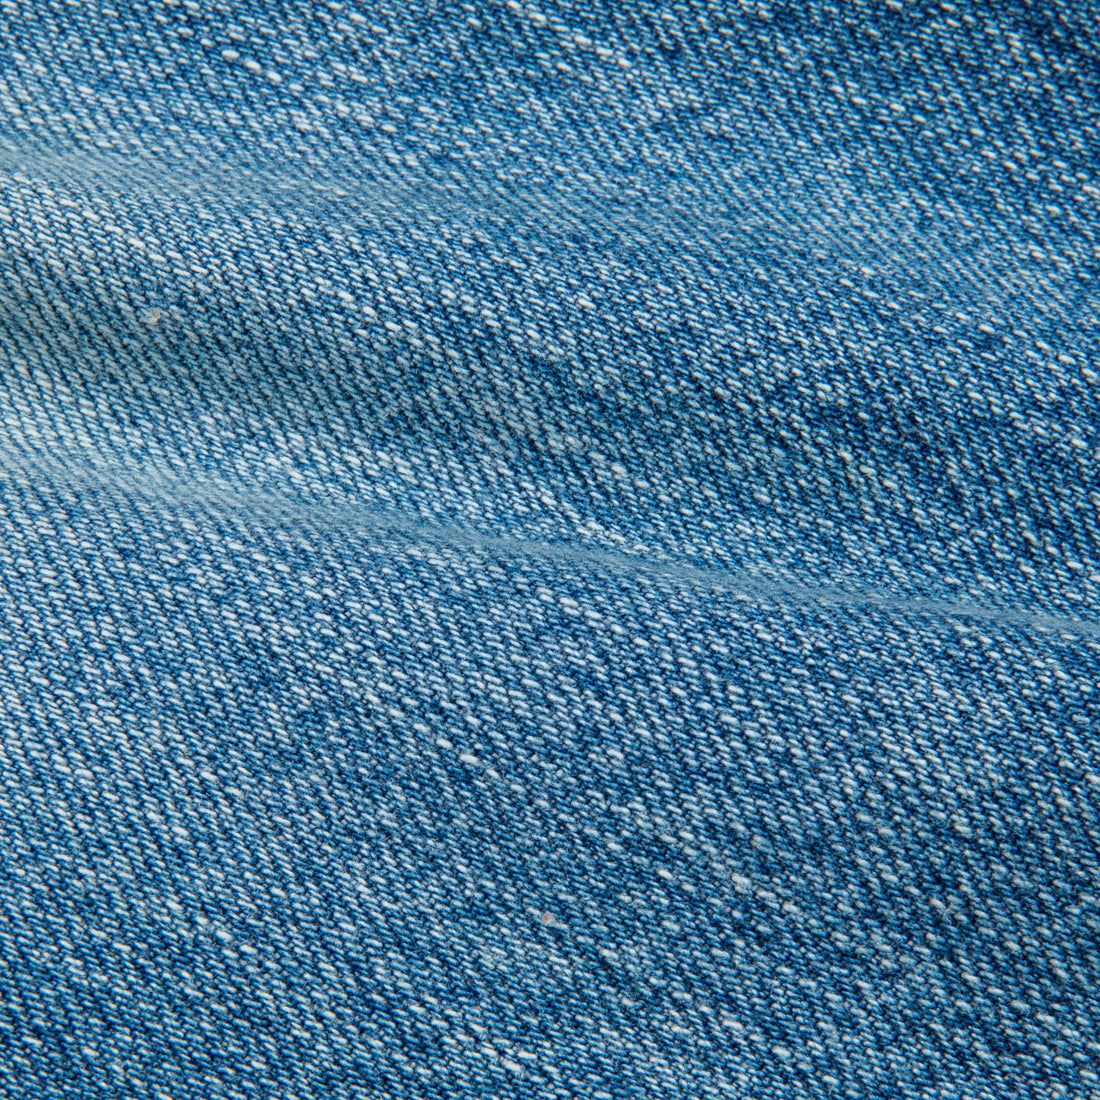 Studio D'Artisan D1811UM Ivy Fit jeans used wash